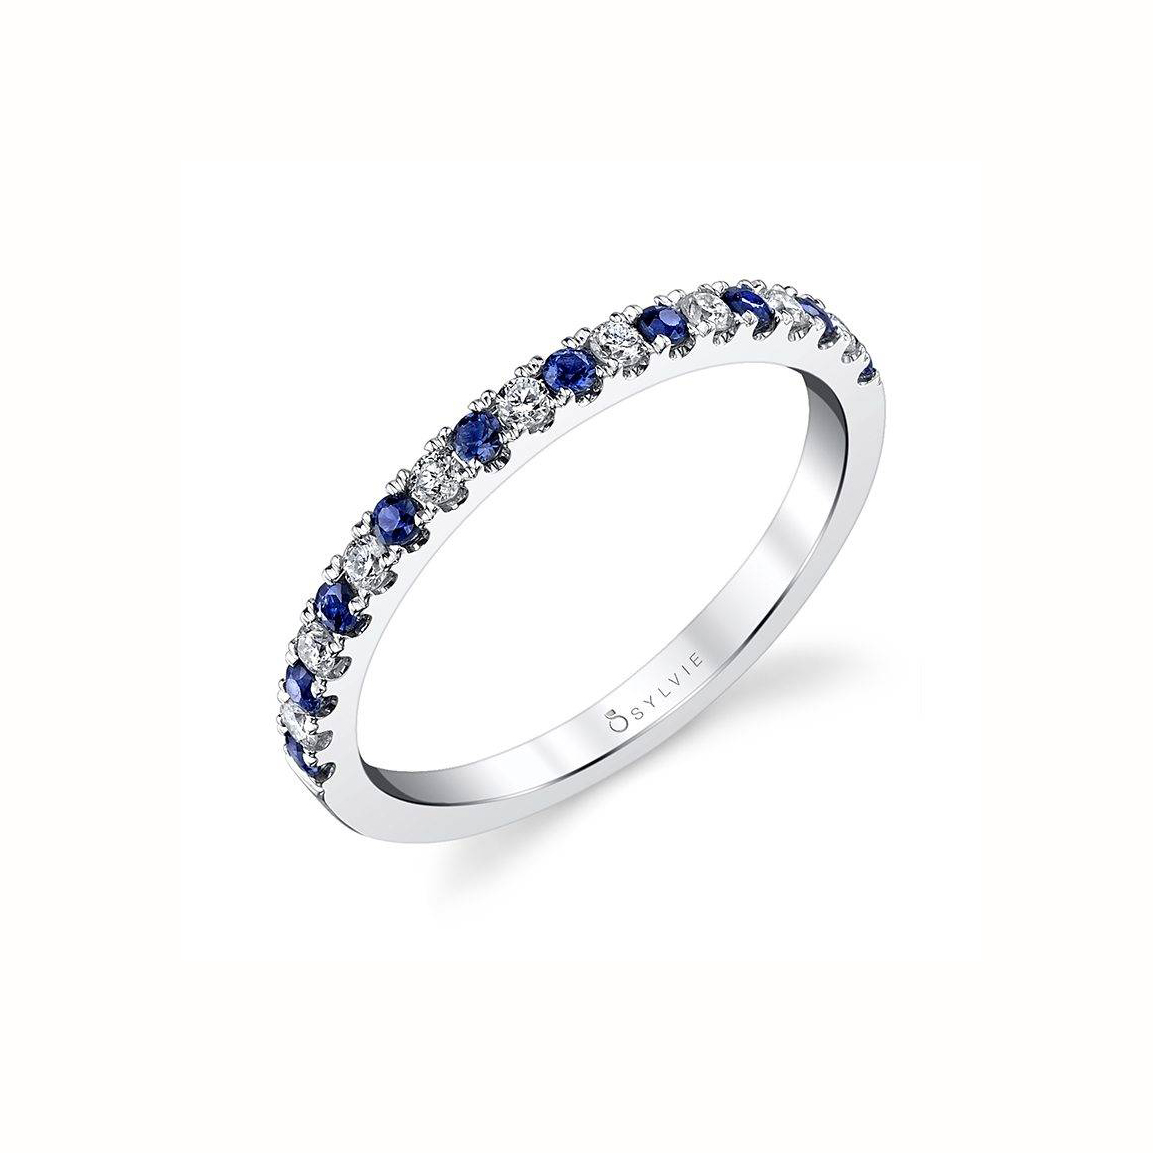 061640Alternating Diamond and Sapphire Wedding Band